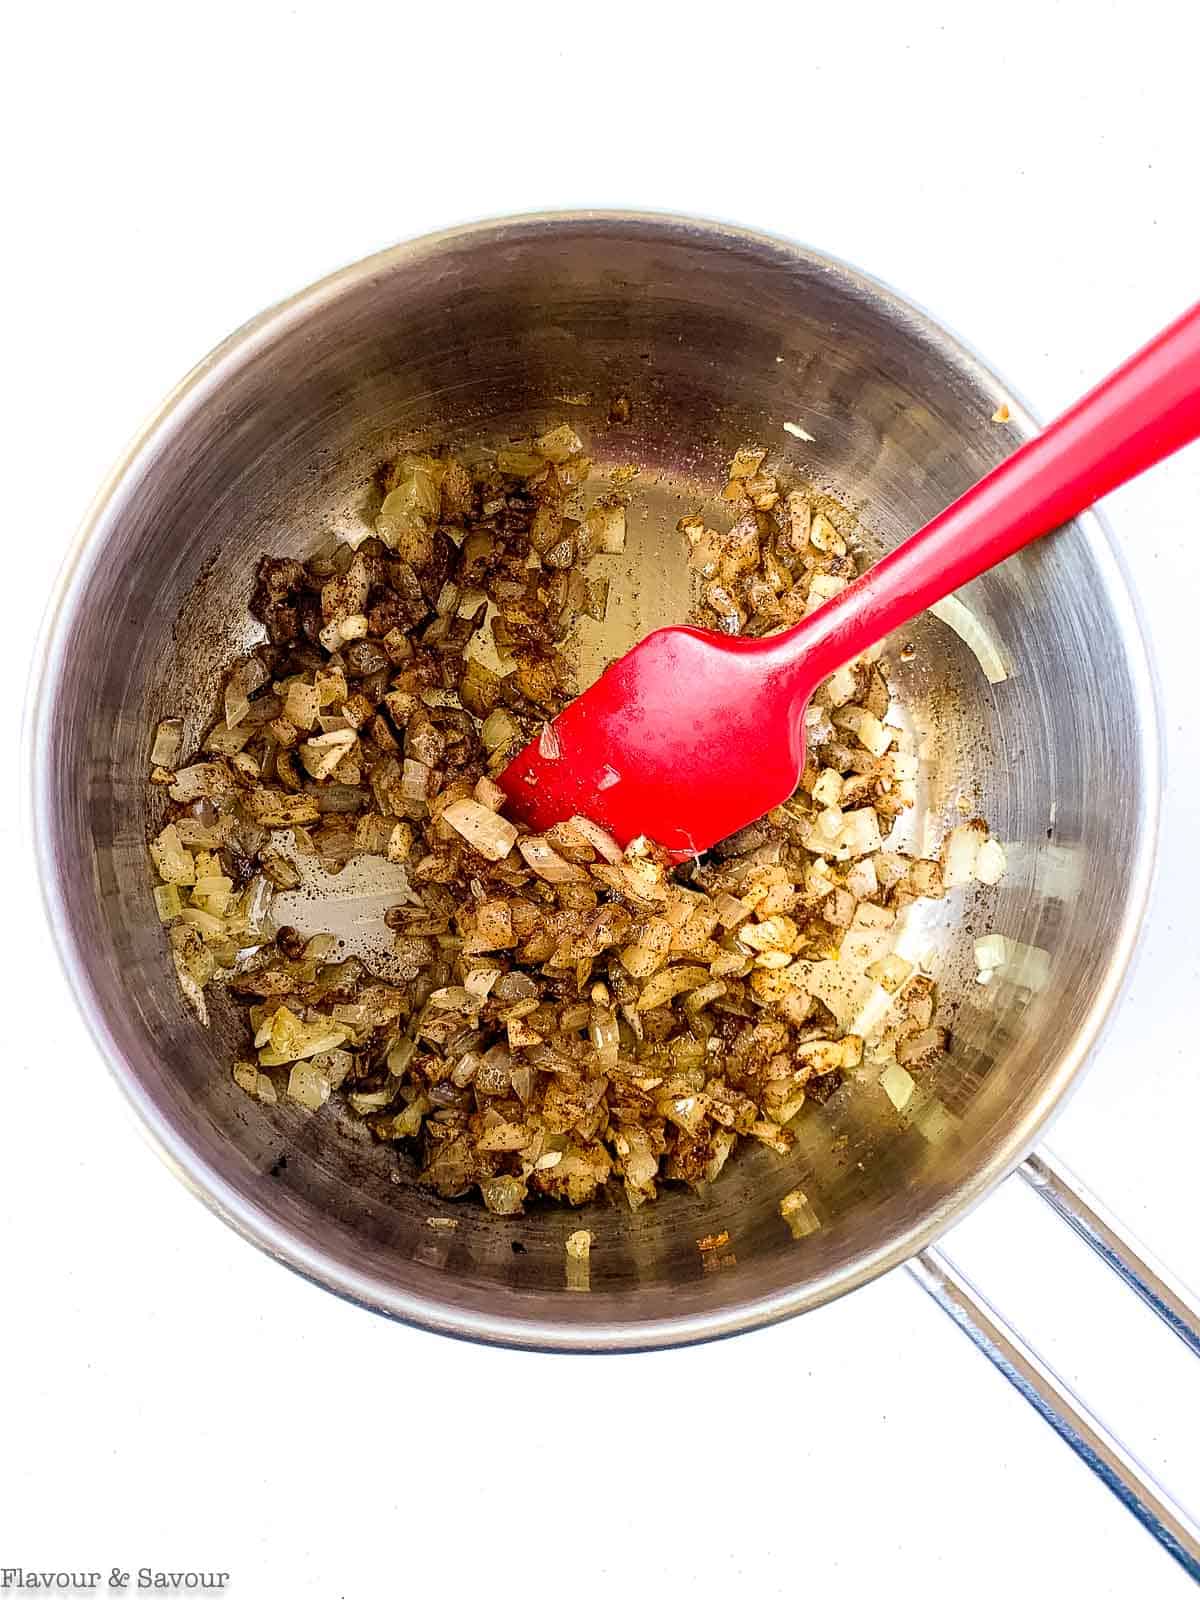 Adding chili powder to onions and garlic in a saucepan.